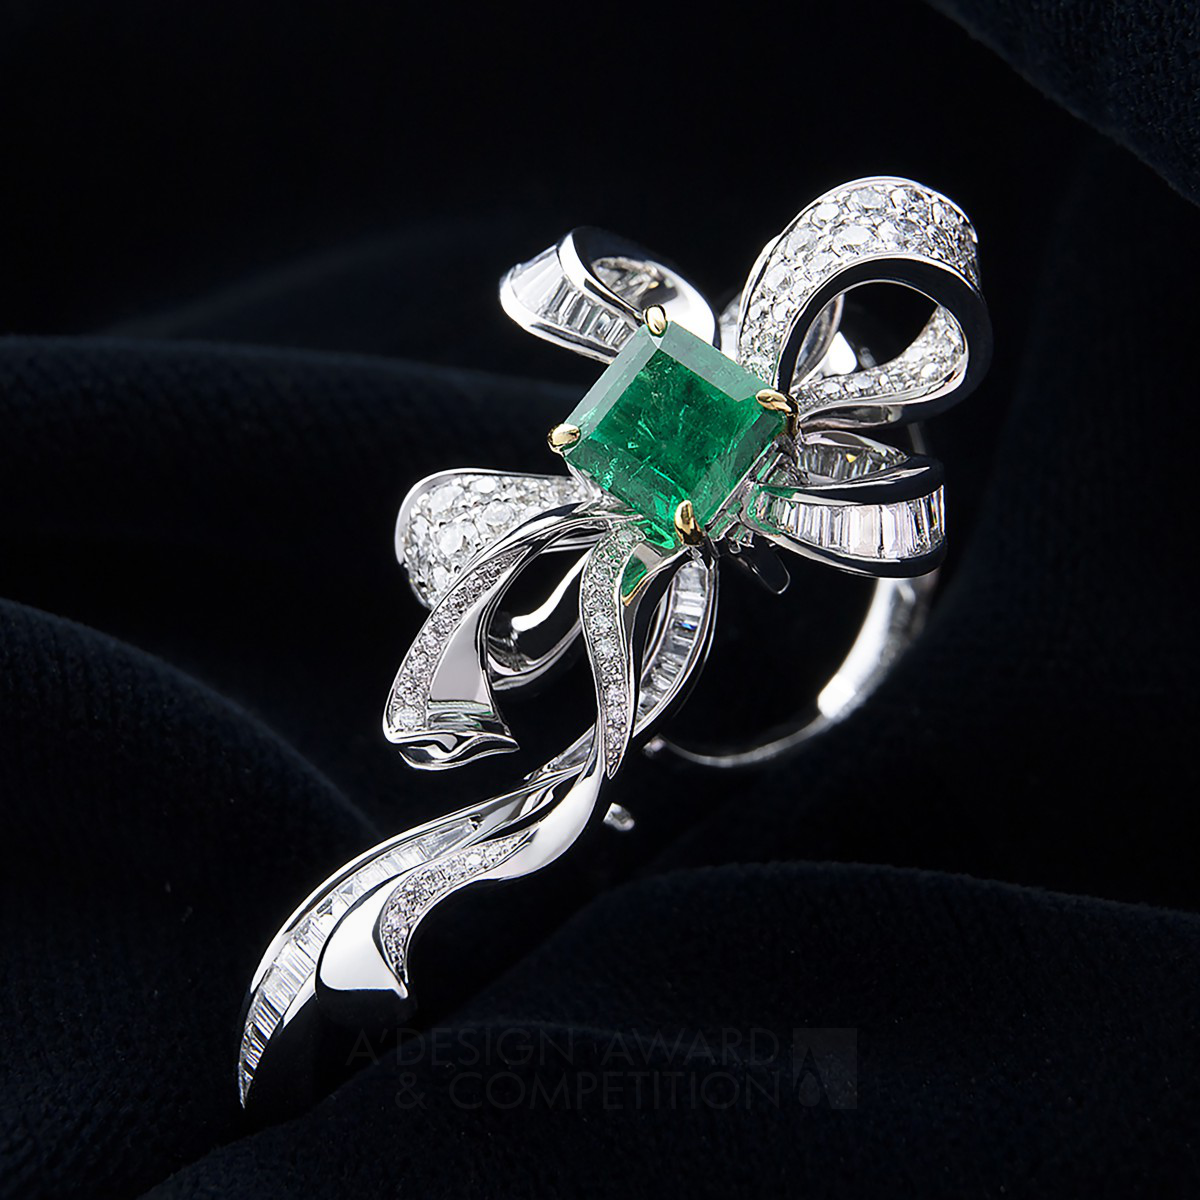 Olivia Yao wins Silver at the prestigious A' Jewelry Design Award with Emerald Ribbon Ring Multiwear Jewelry.